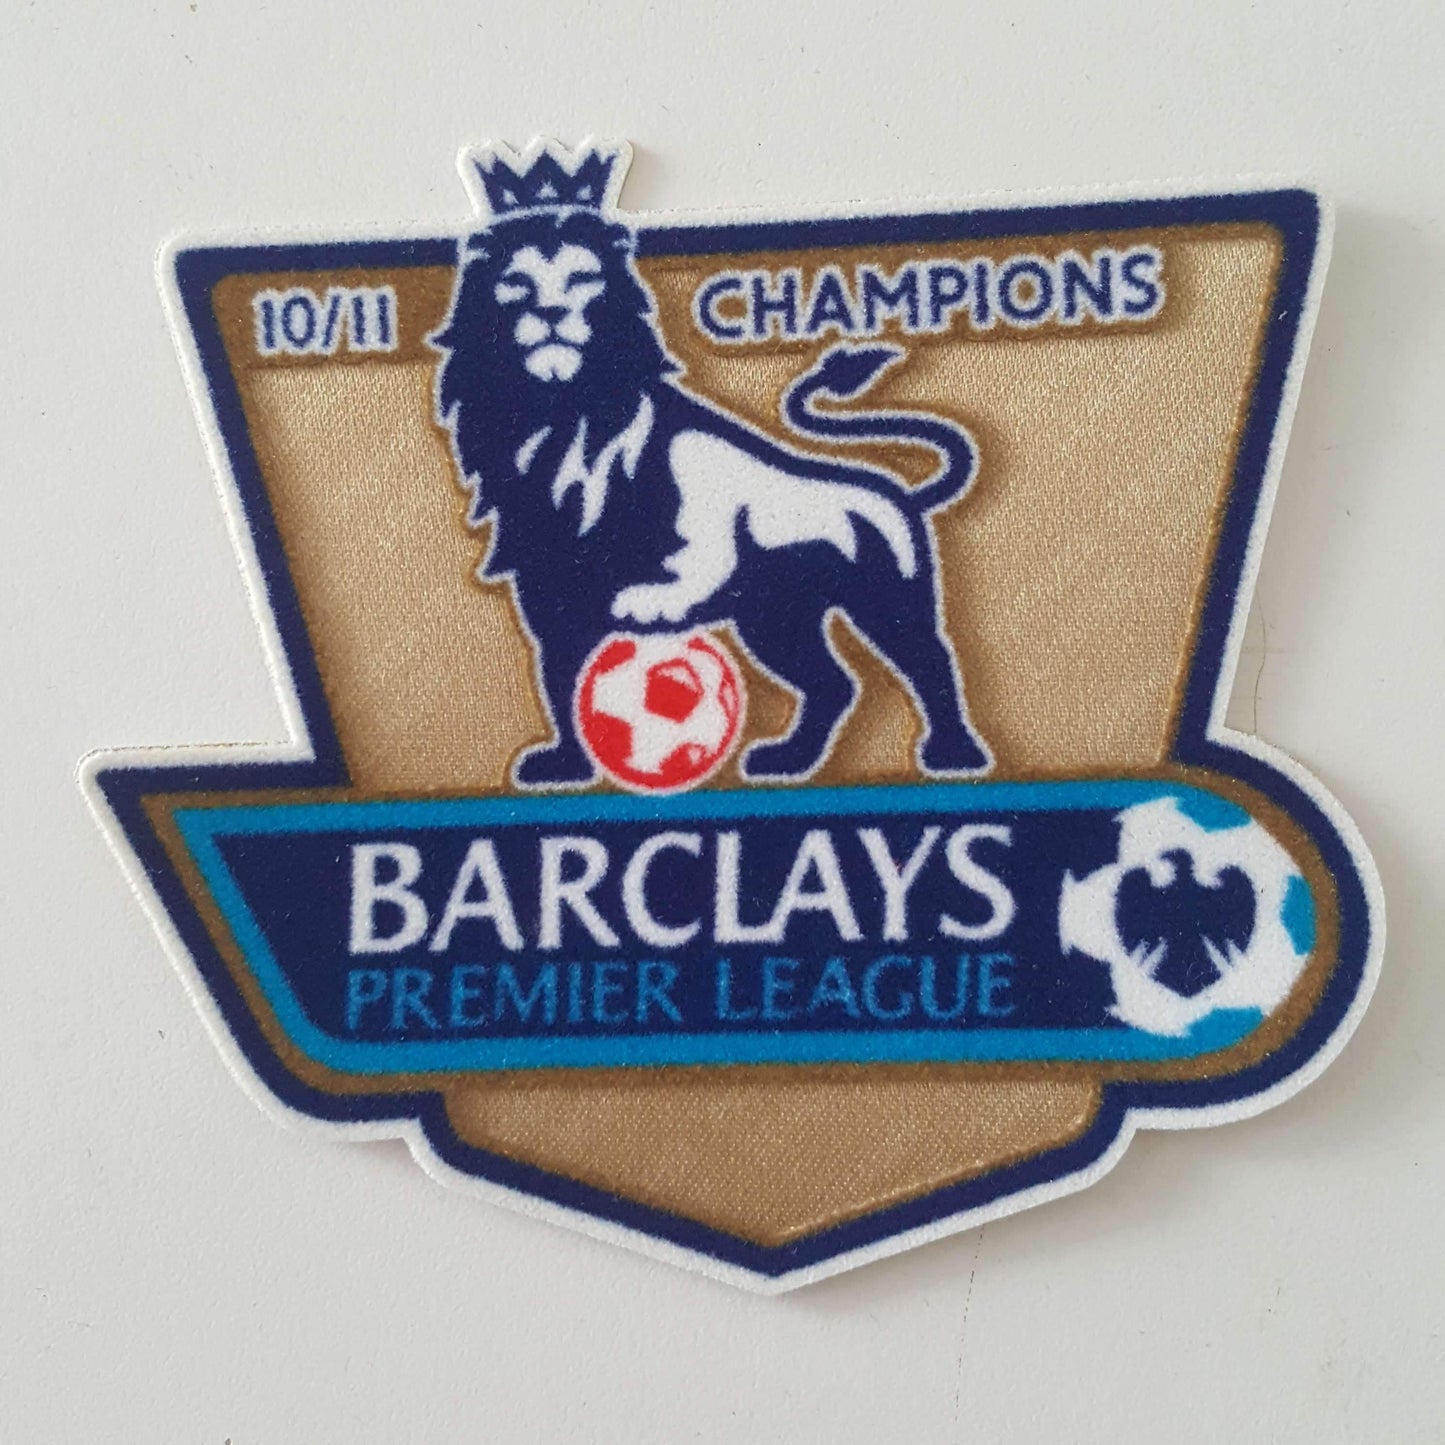 2010/11 Barclays Premier League Champions Patch - ClassicFootballJersey